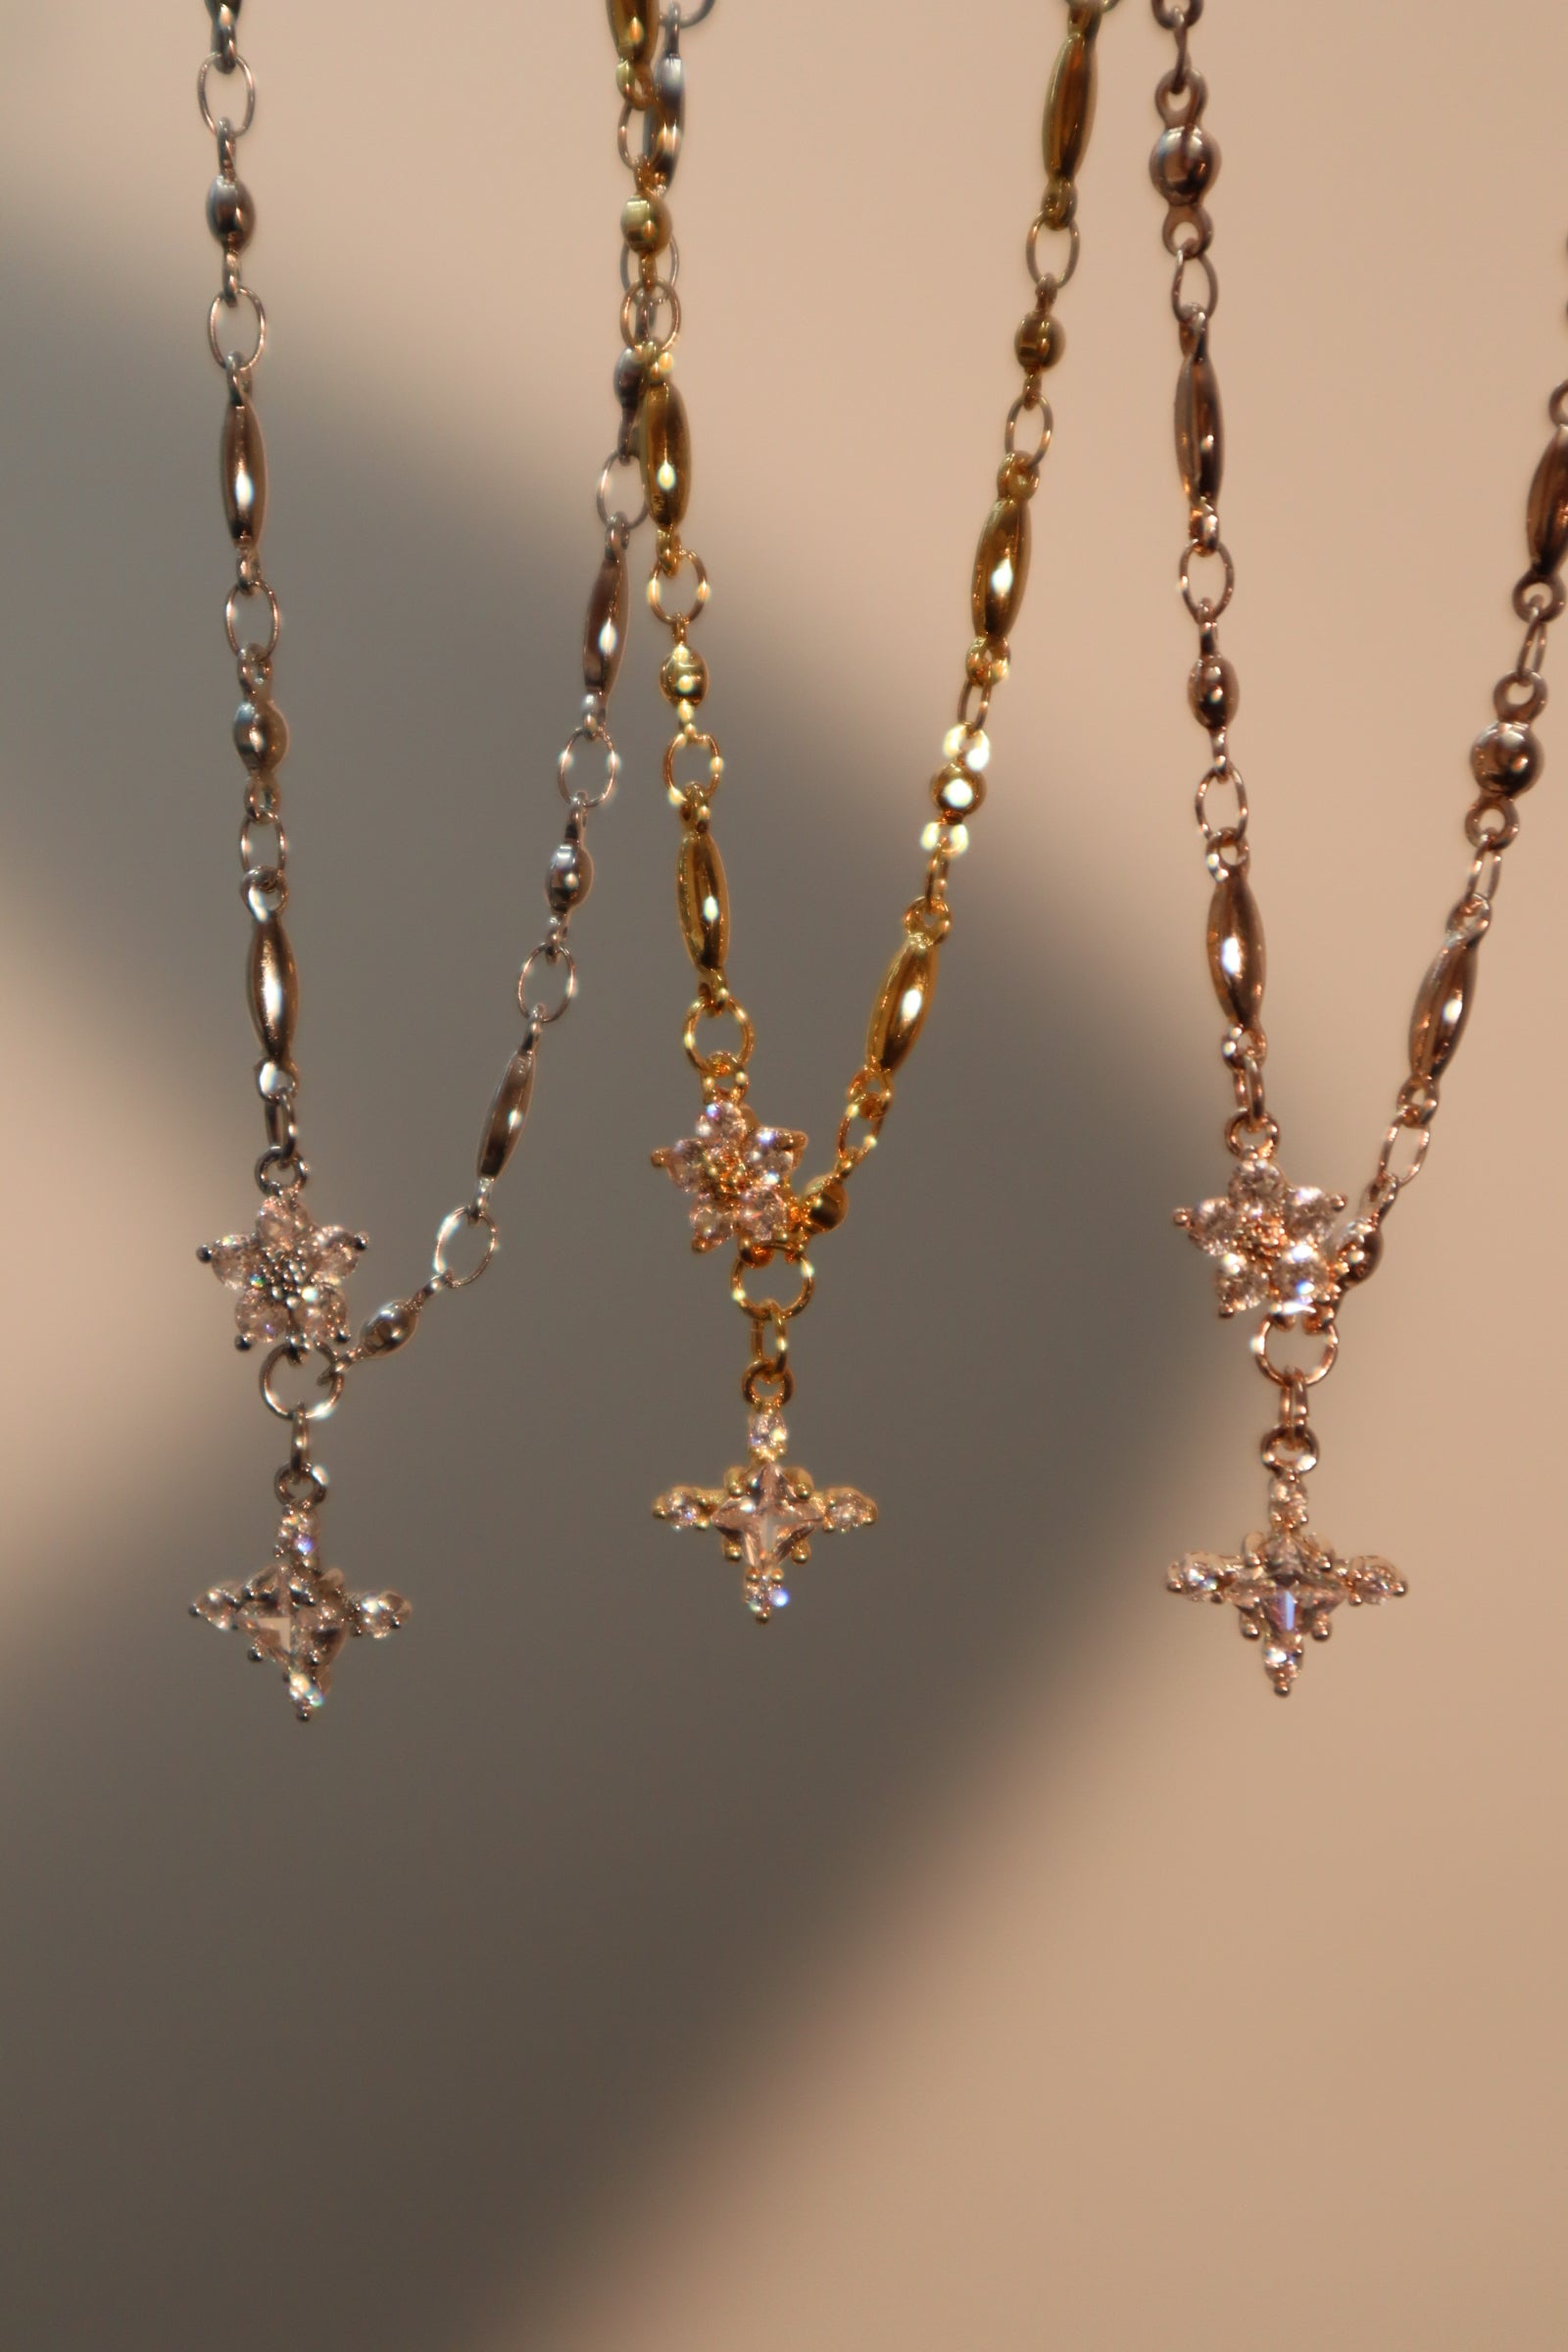 Dainty Gold Cross Necklace For Women, Dainty Gold Cross Necklace, Simple  Cross Necklace, Gift For Her, Dainty Gold For Women, Layered Necklace